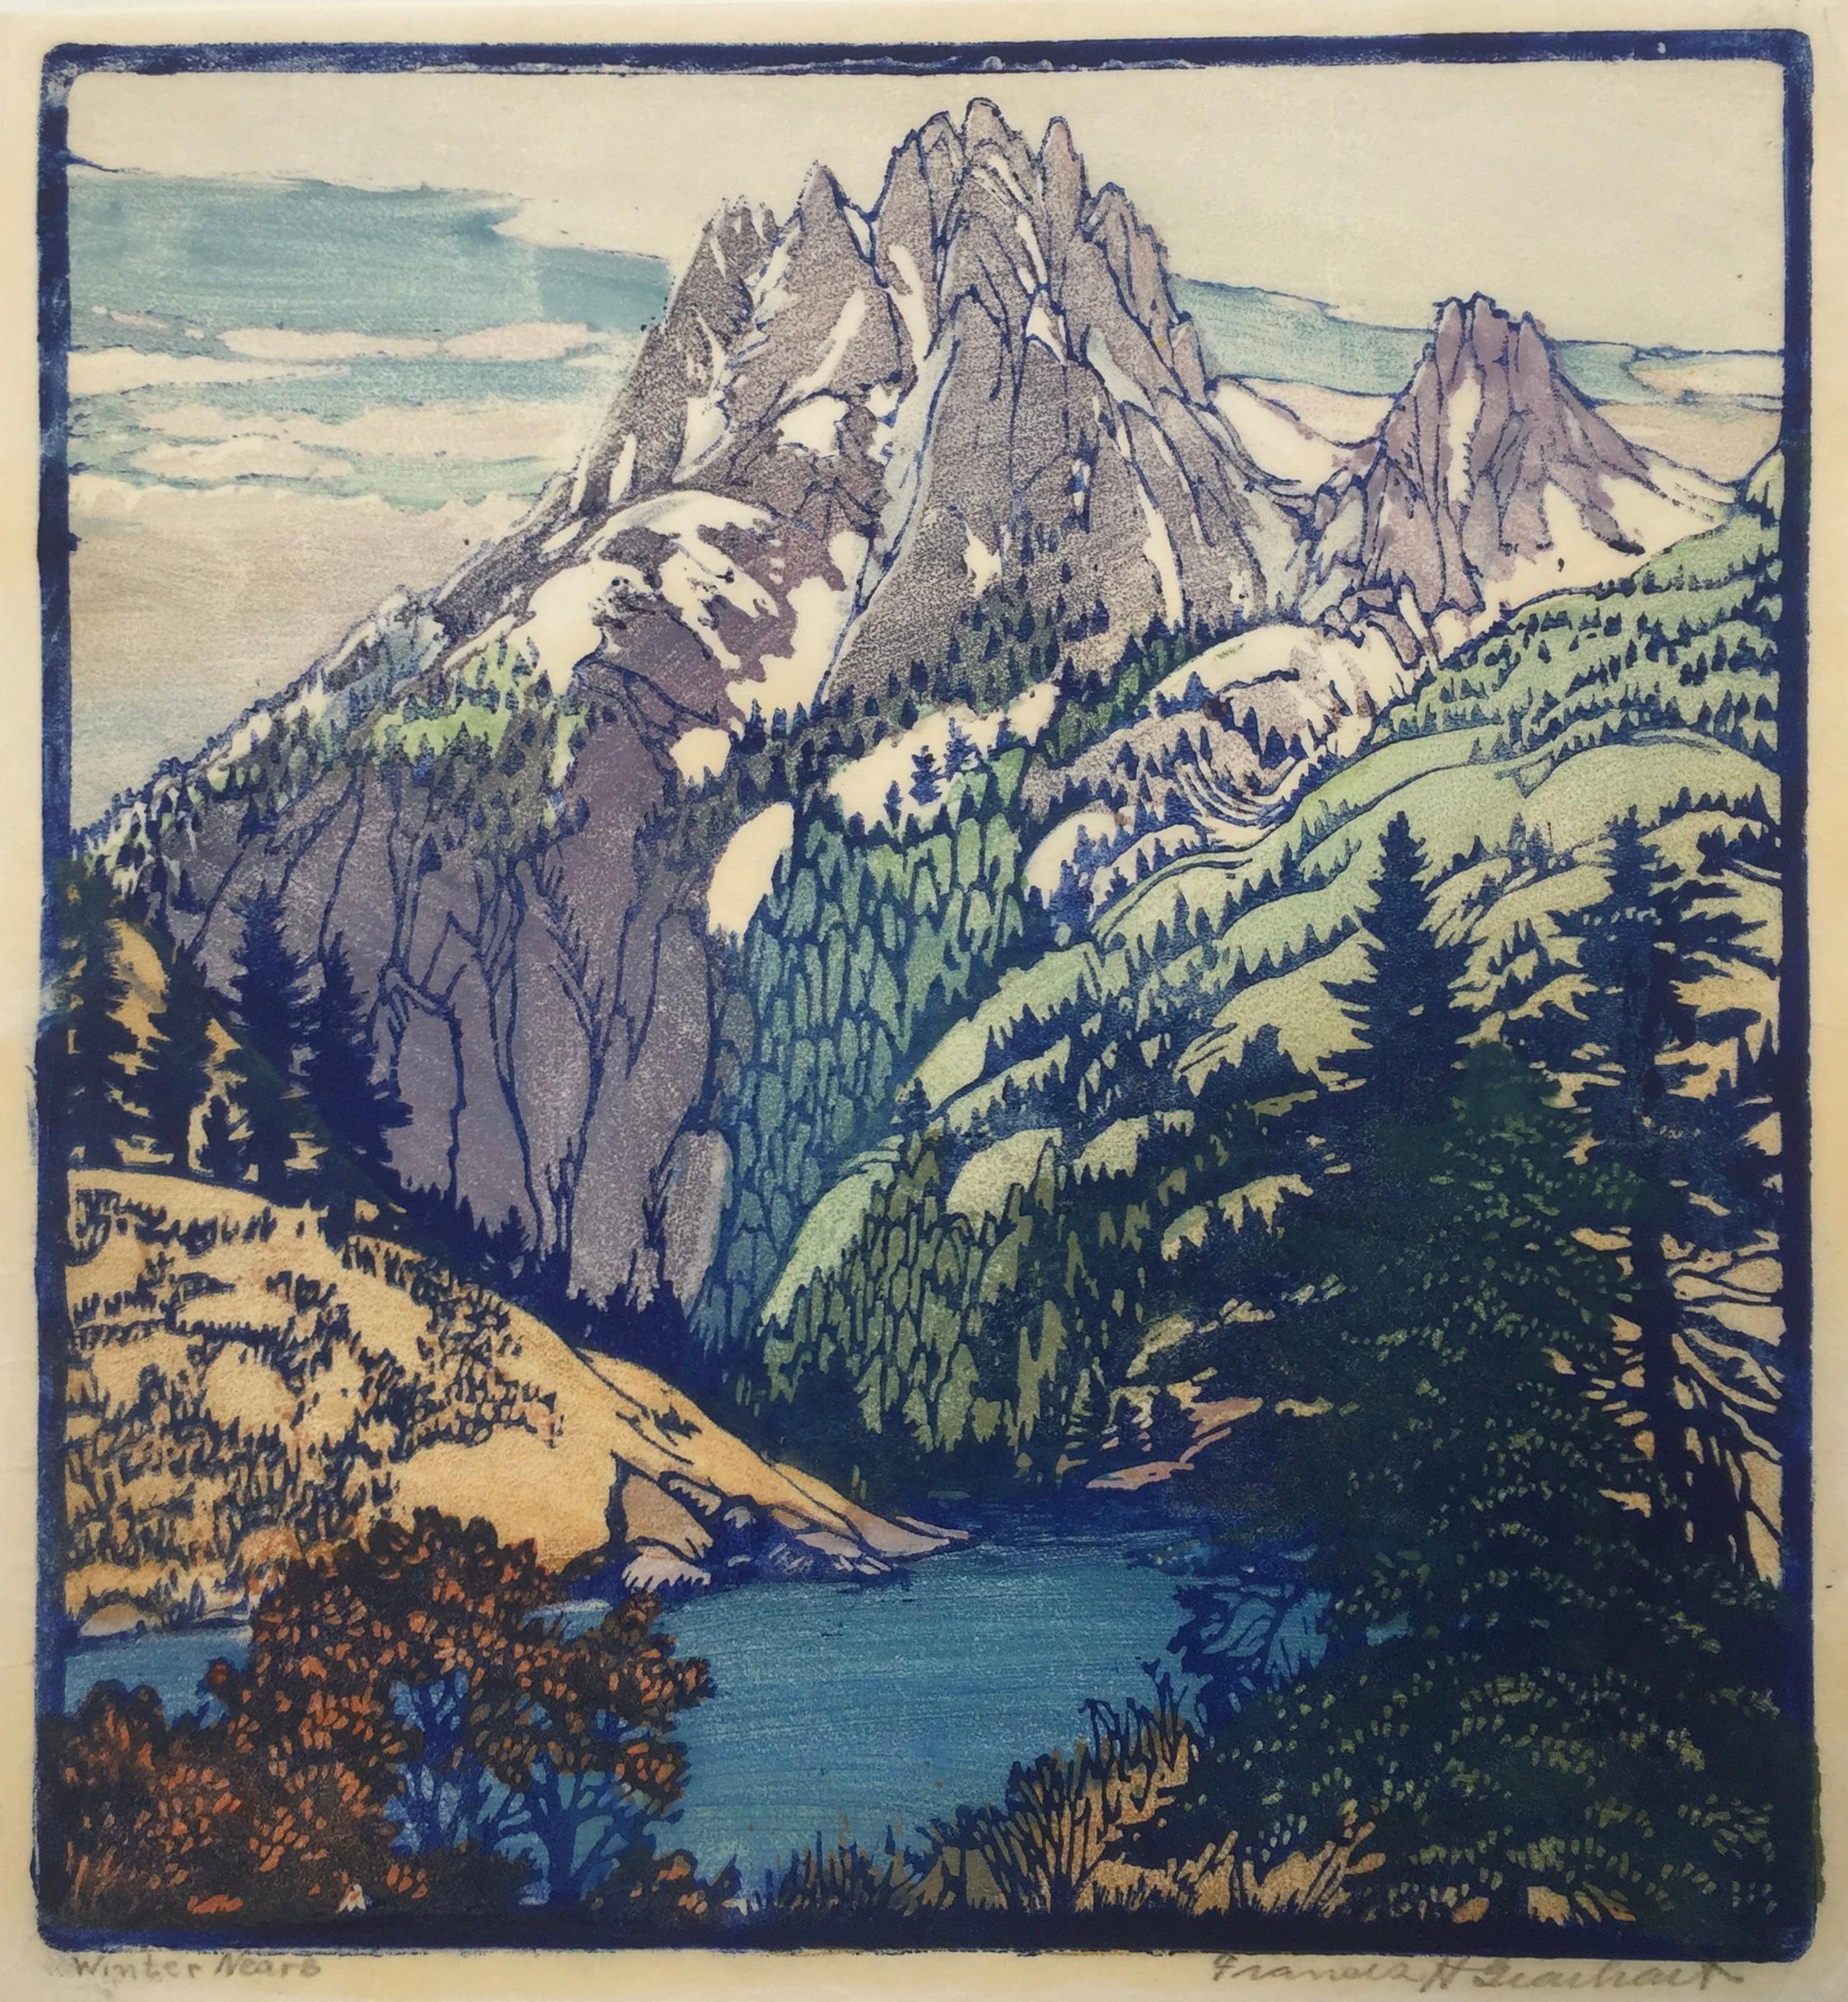 Frances H. Gearhart Landscape Print - WINTER NEARS